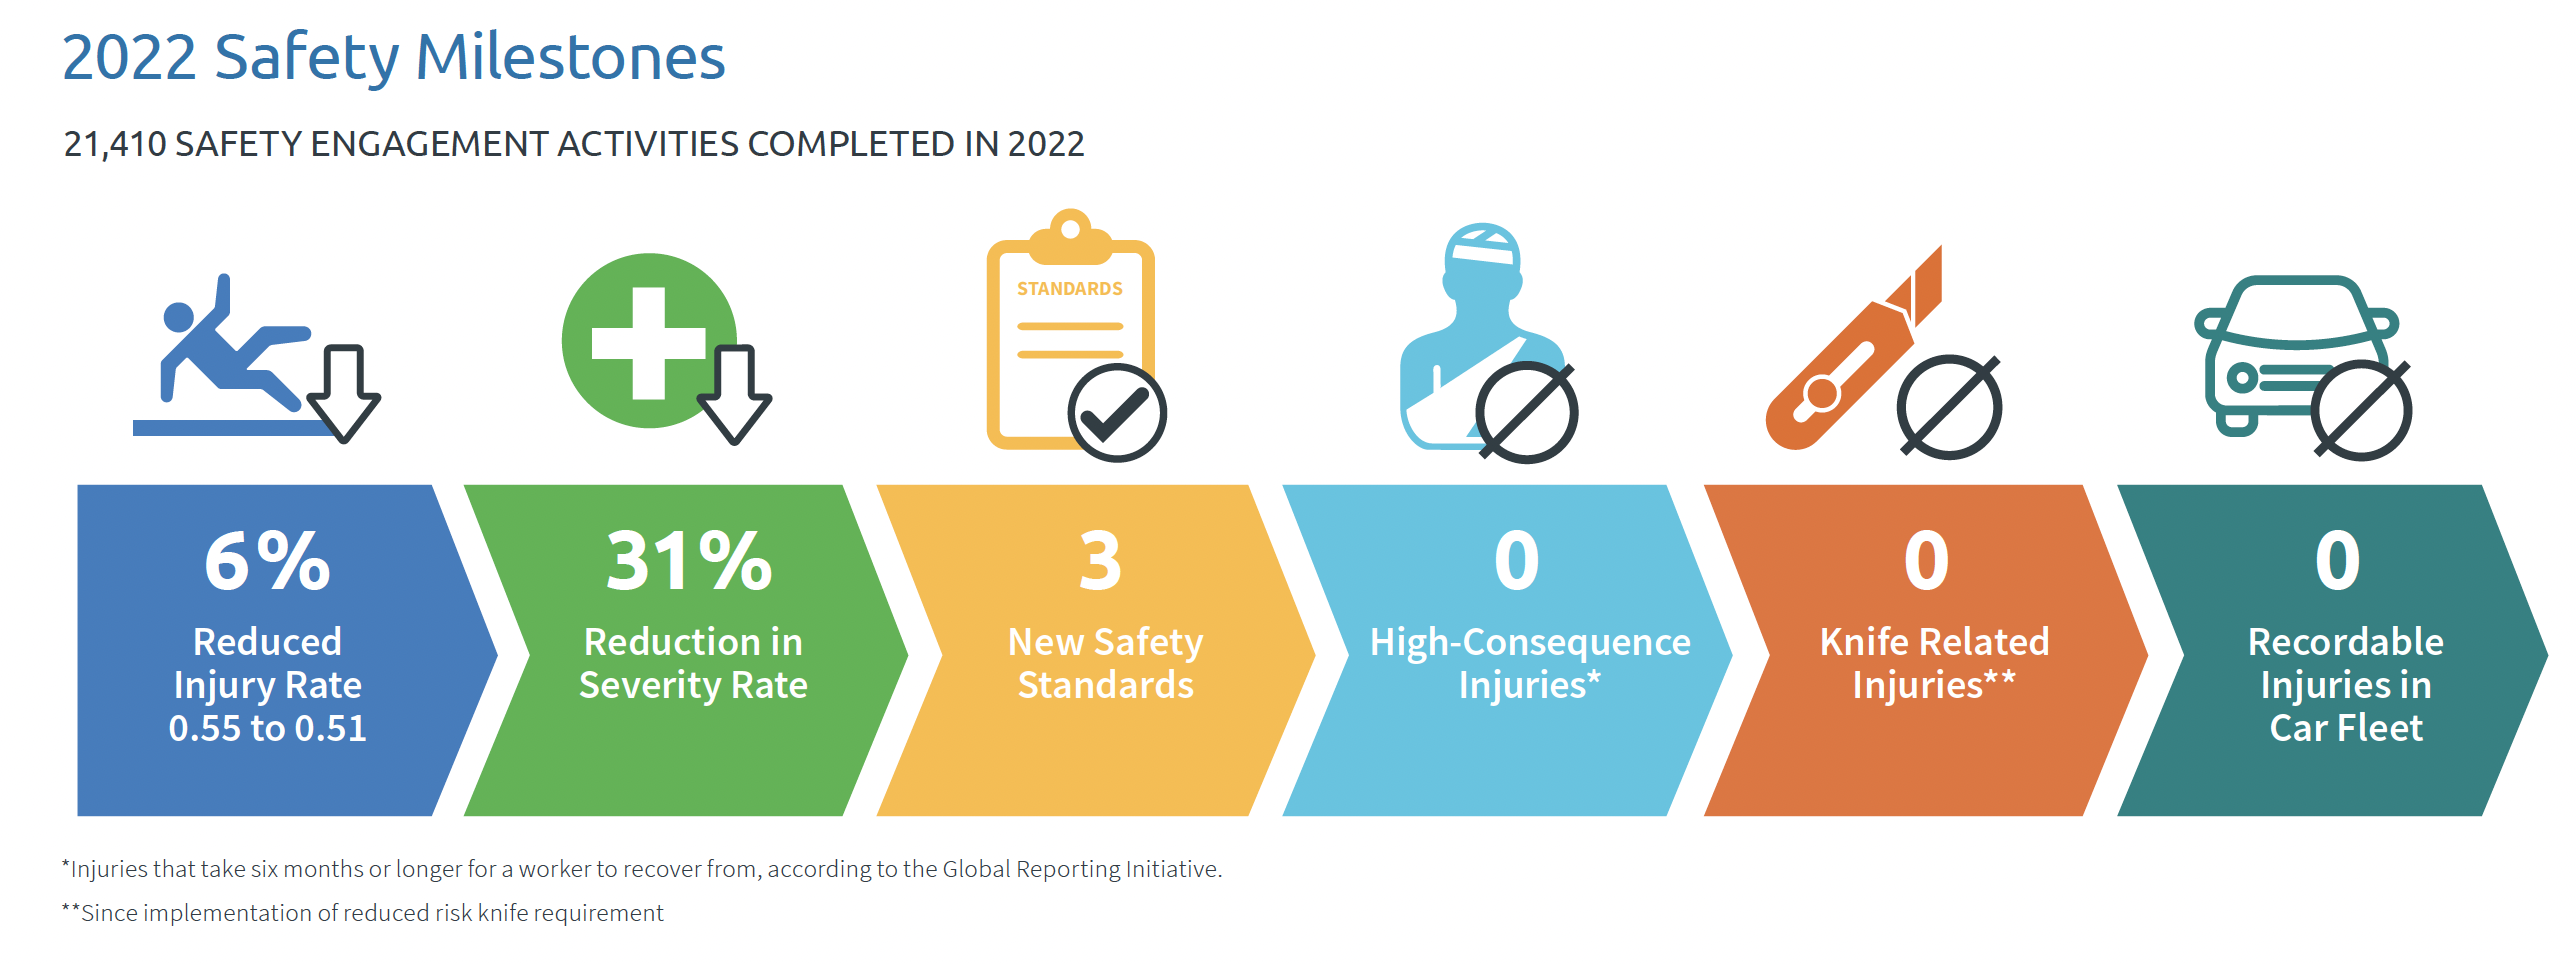 2022 Safety Milestones